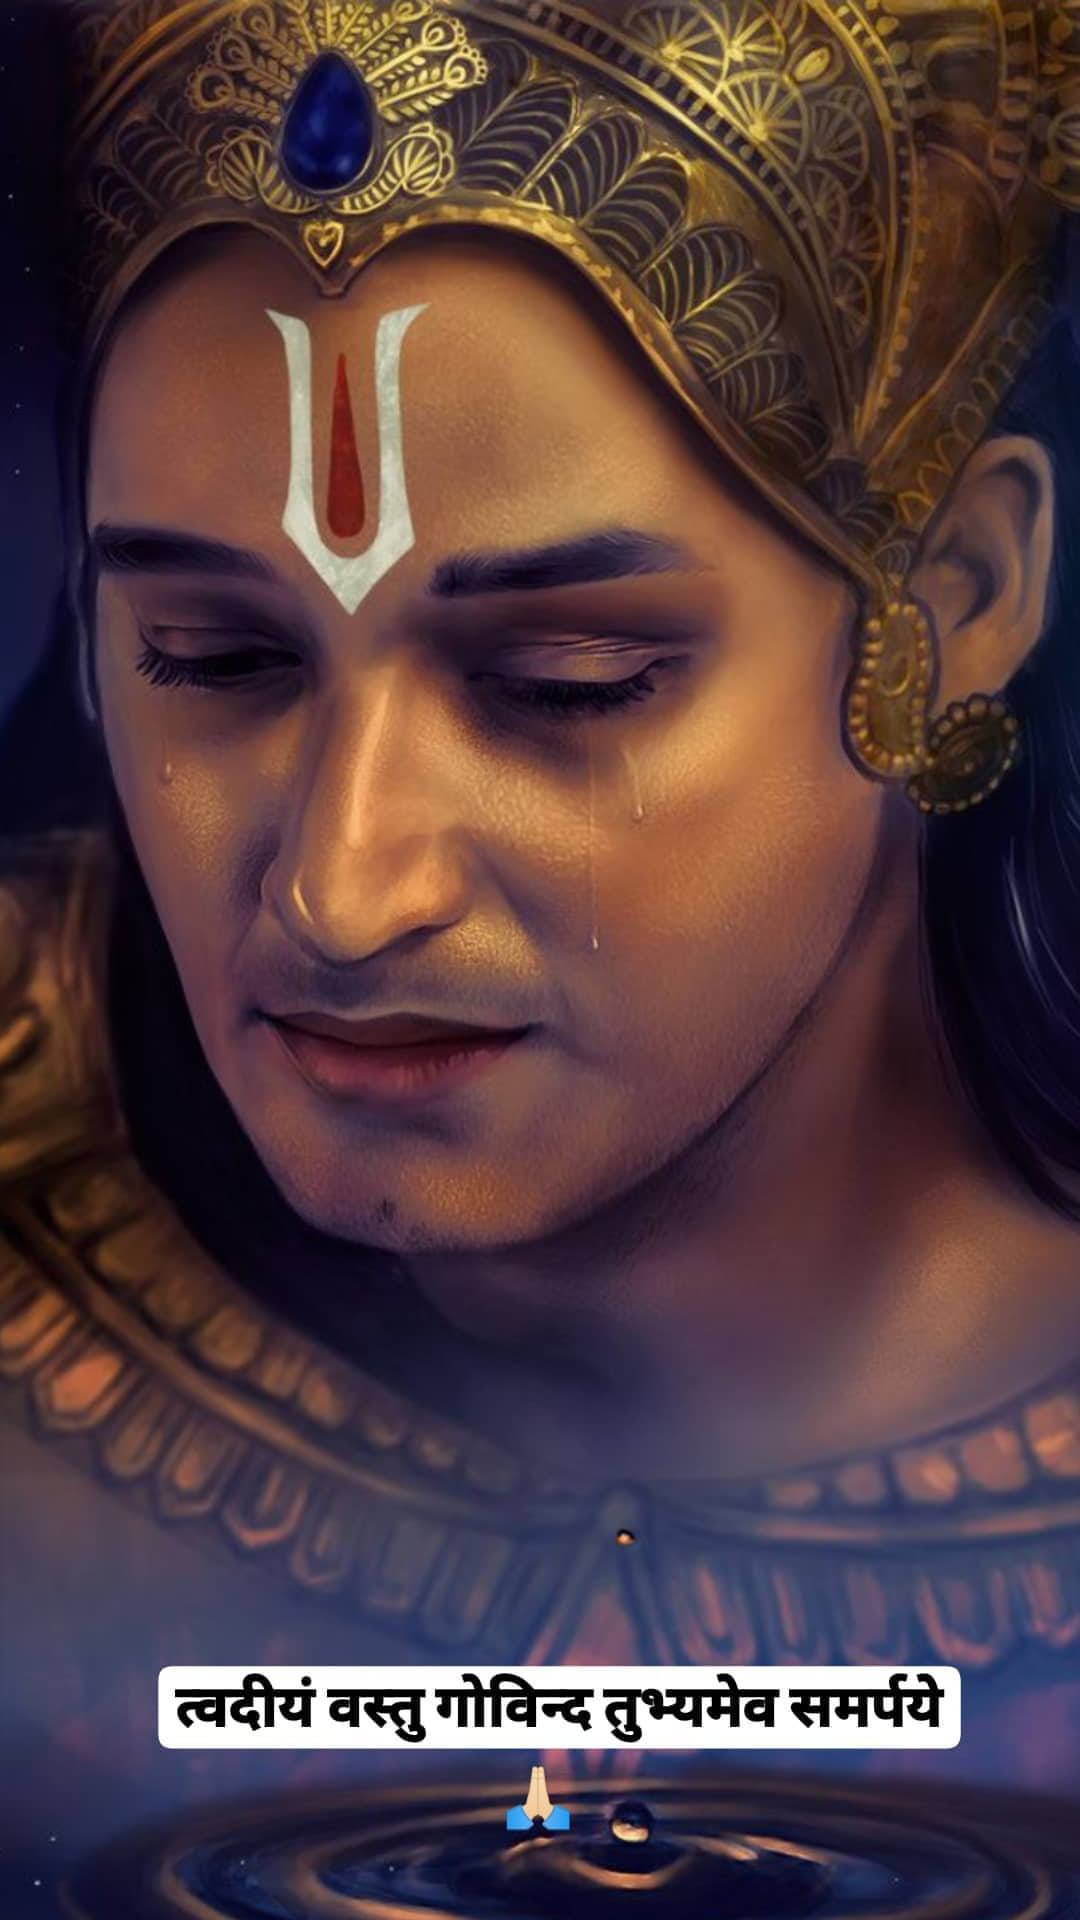 Emotional Krishna Holding A Phone - Sourabh Raaj Jain Background